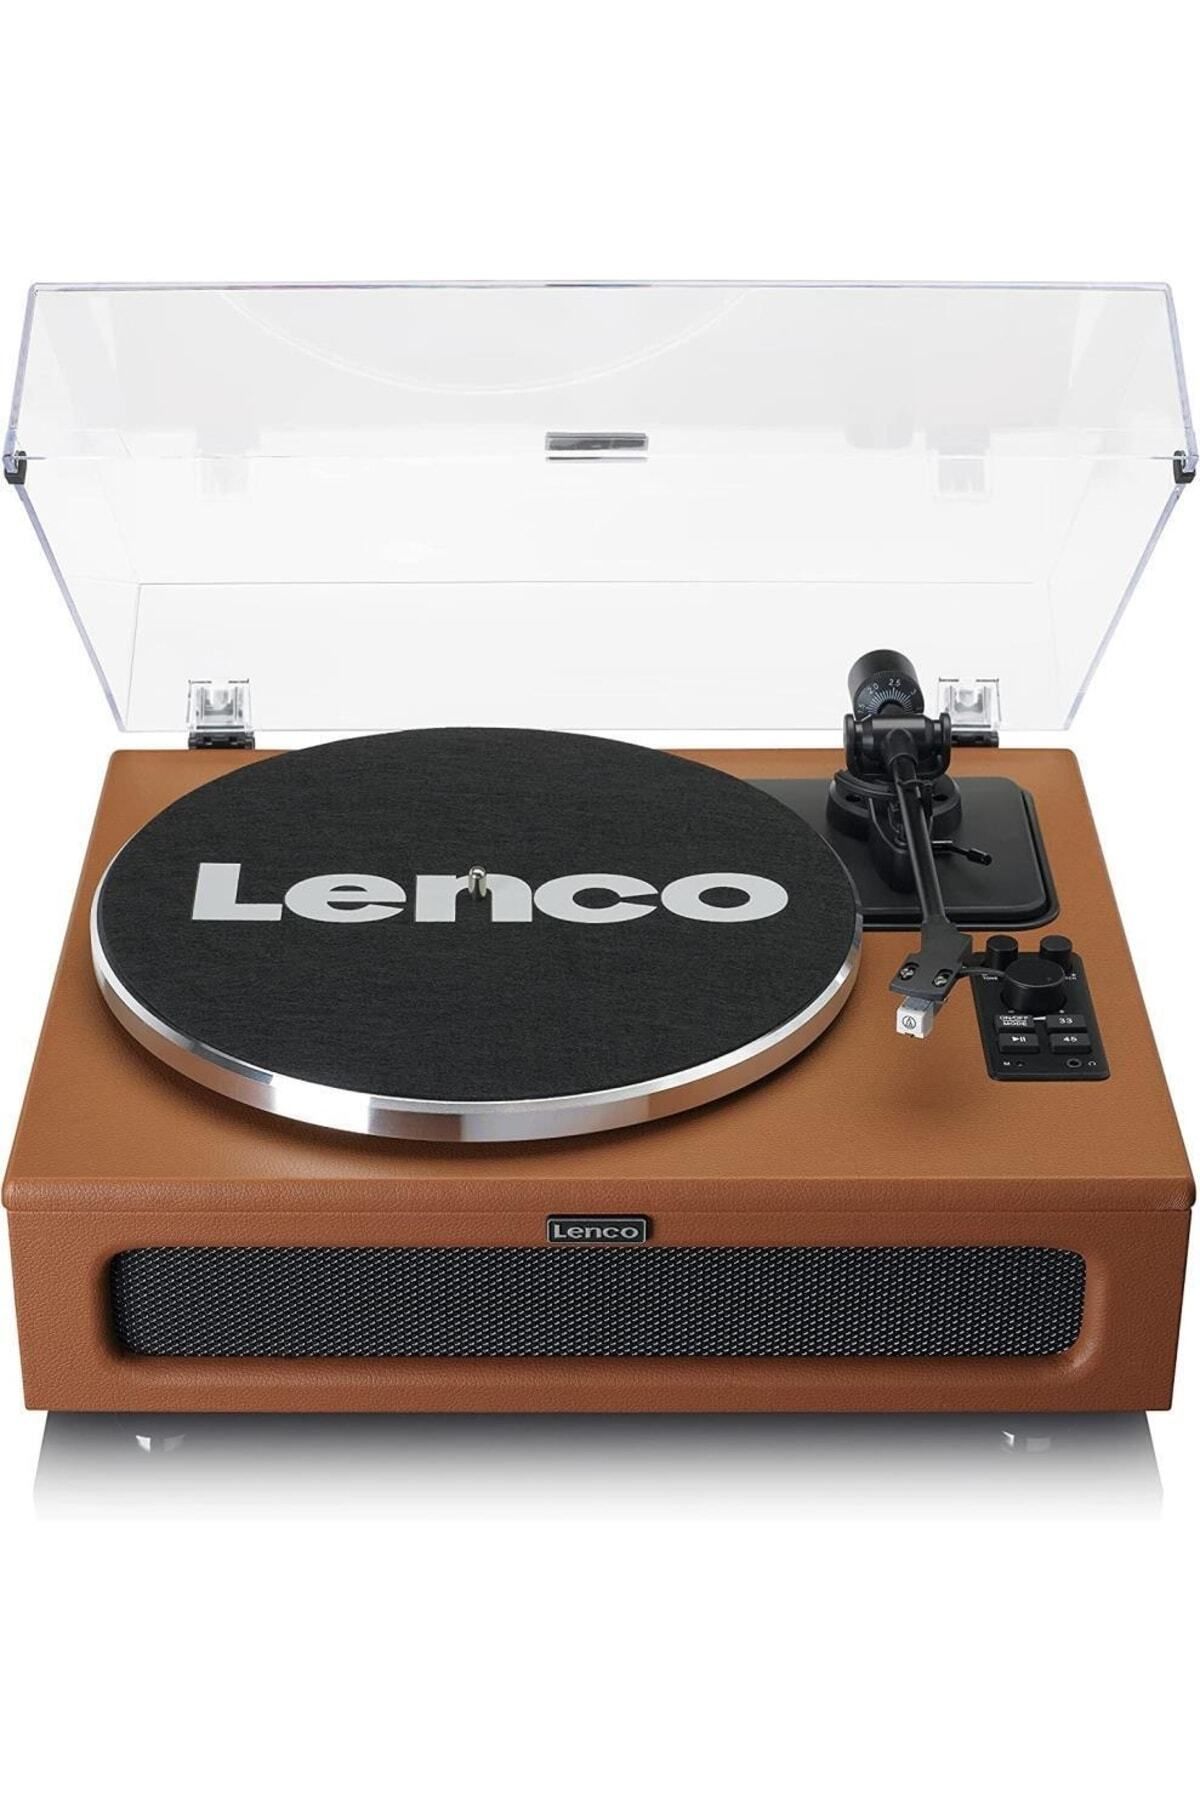 Lenco Ls-430bn 4 Dahili Hoparlörlü Bluetoothlu Pikap Plak Çalar Kahverengi